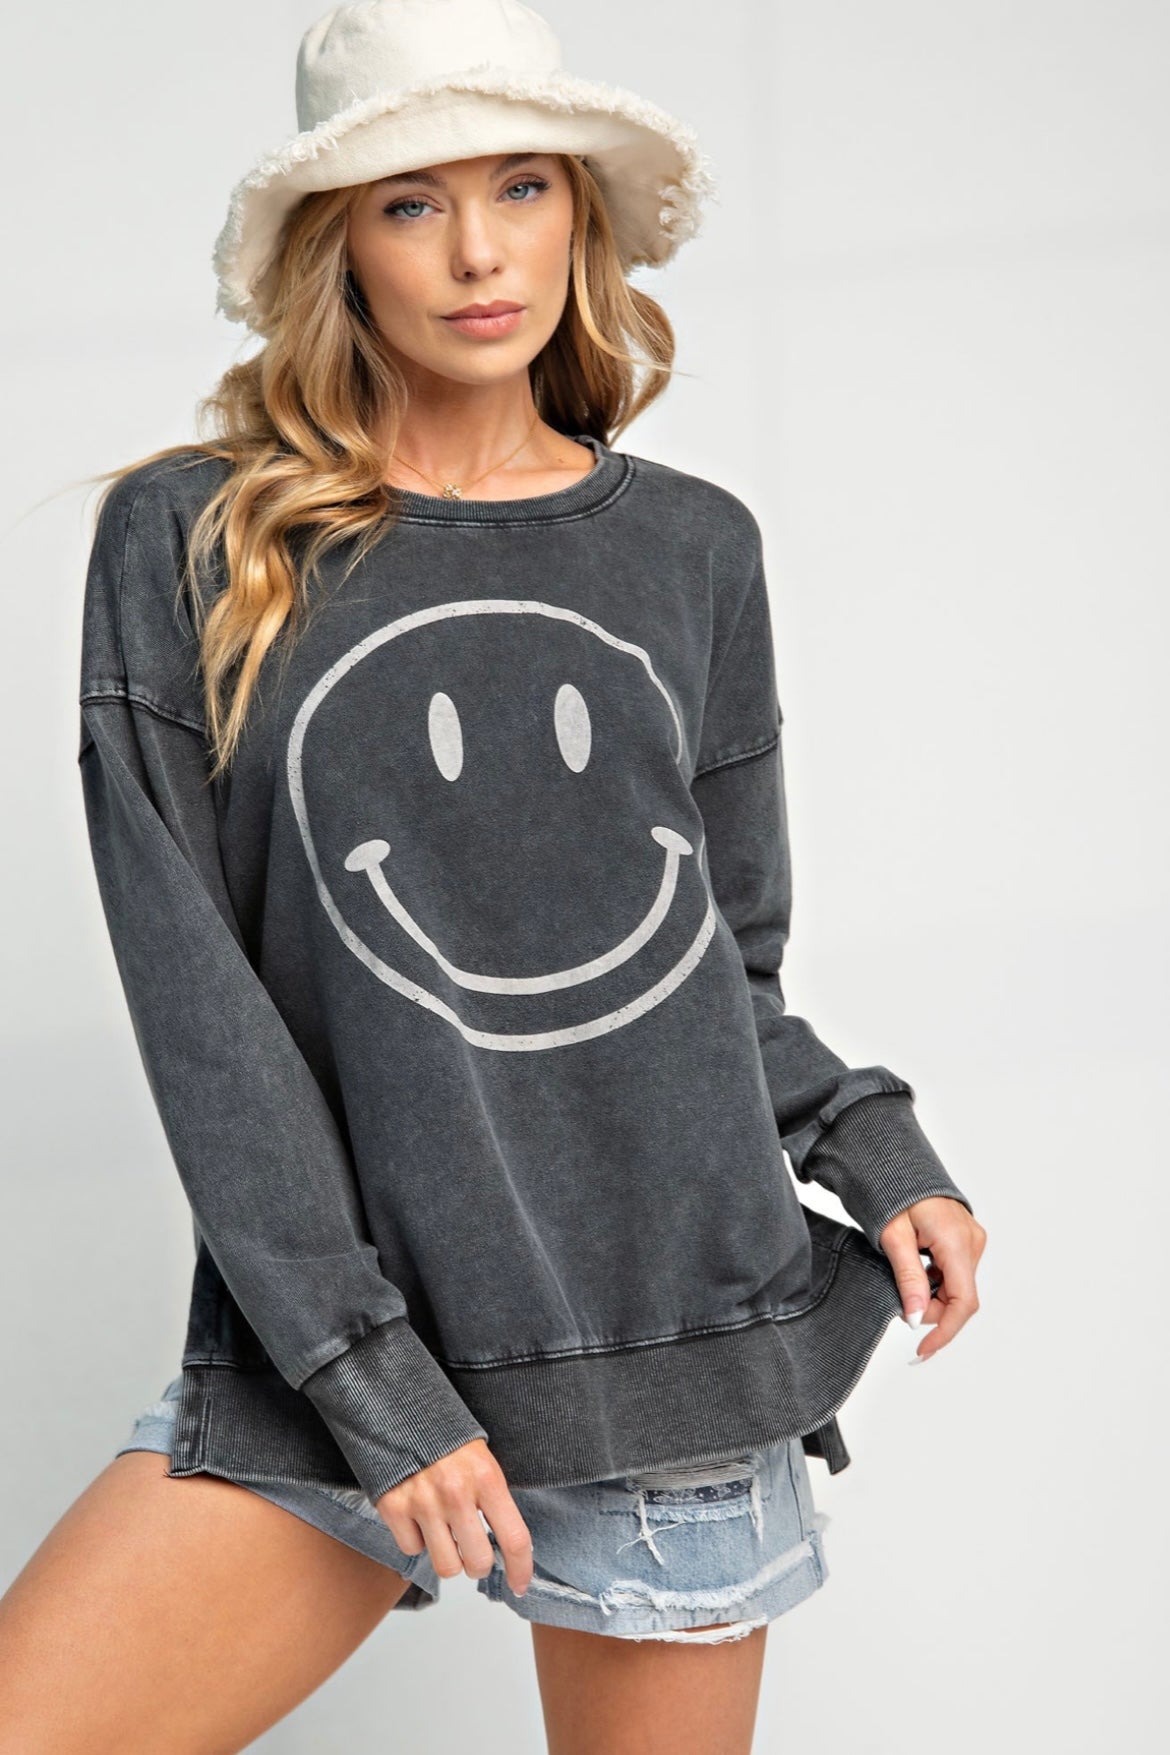 Put on a Happy Face Sweatshirt